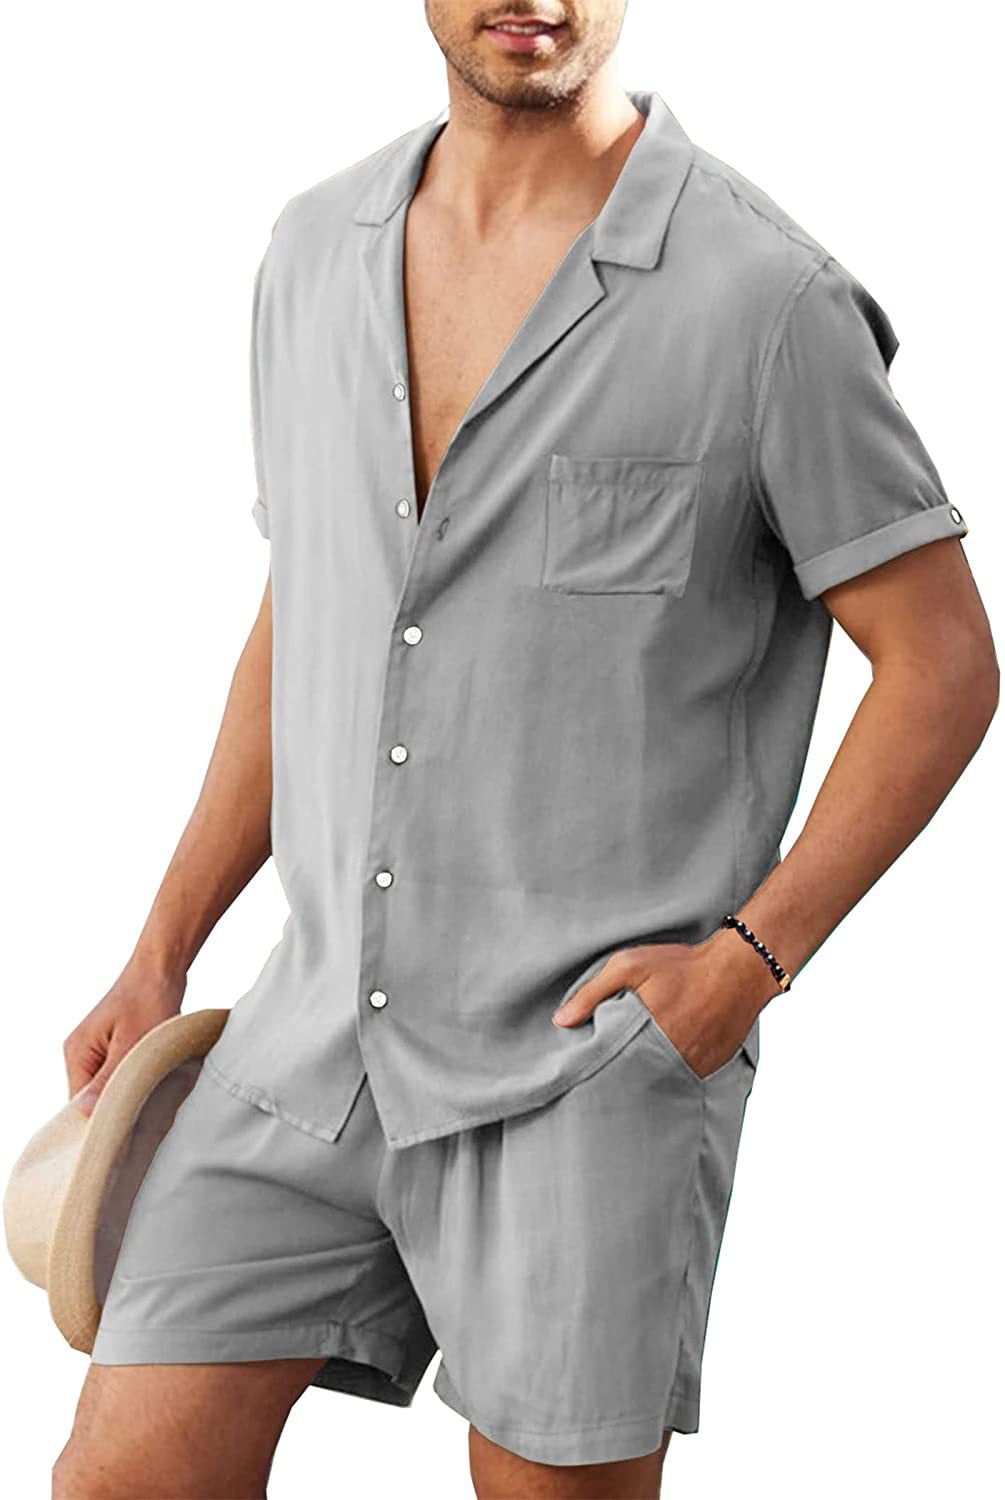 Casual Summer Men's Short Sleeves T Shirts and Shorts-Suits-Gray-M-Free Shipping at meselling99